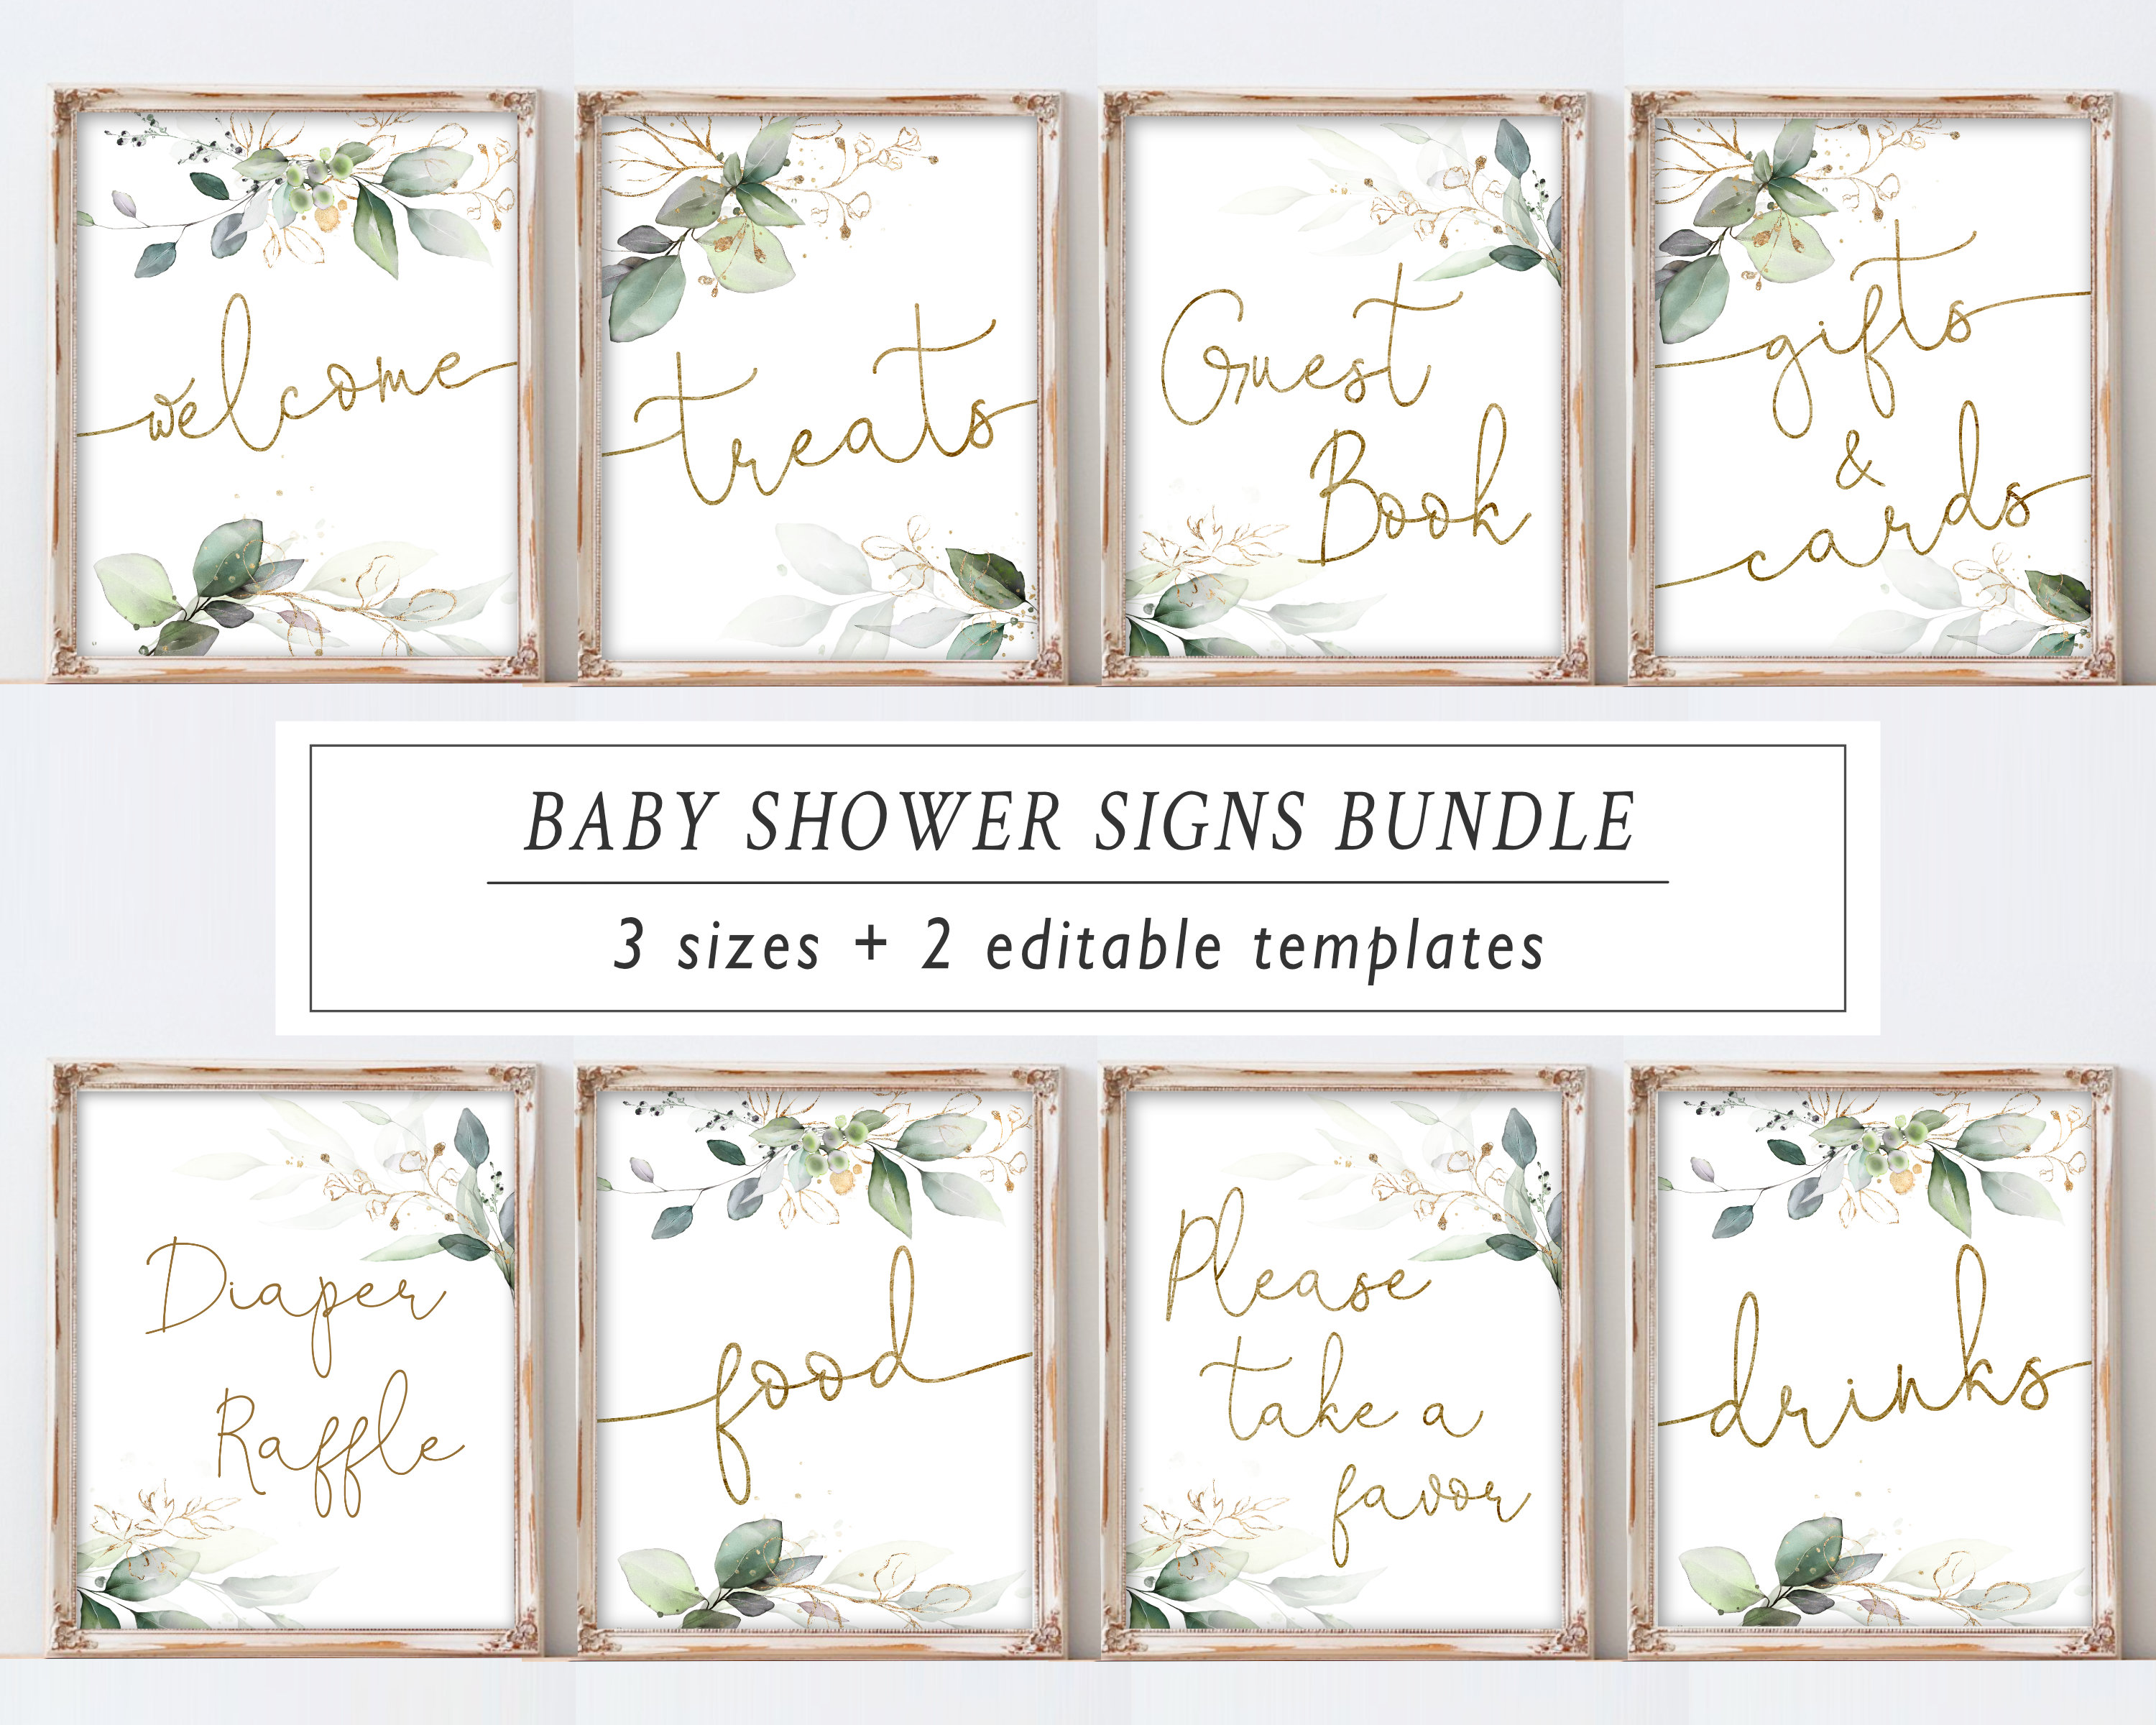 Baby Shower Signs Bundle, Signage Set Printable Decor, Signage Kit,  Editable Template, Greenery Eucalyptus Foliage, Leaves Green Gold, EG12 